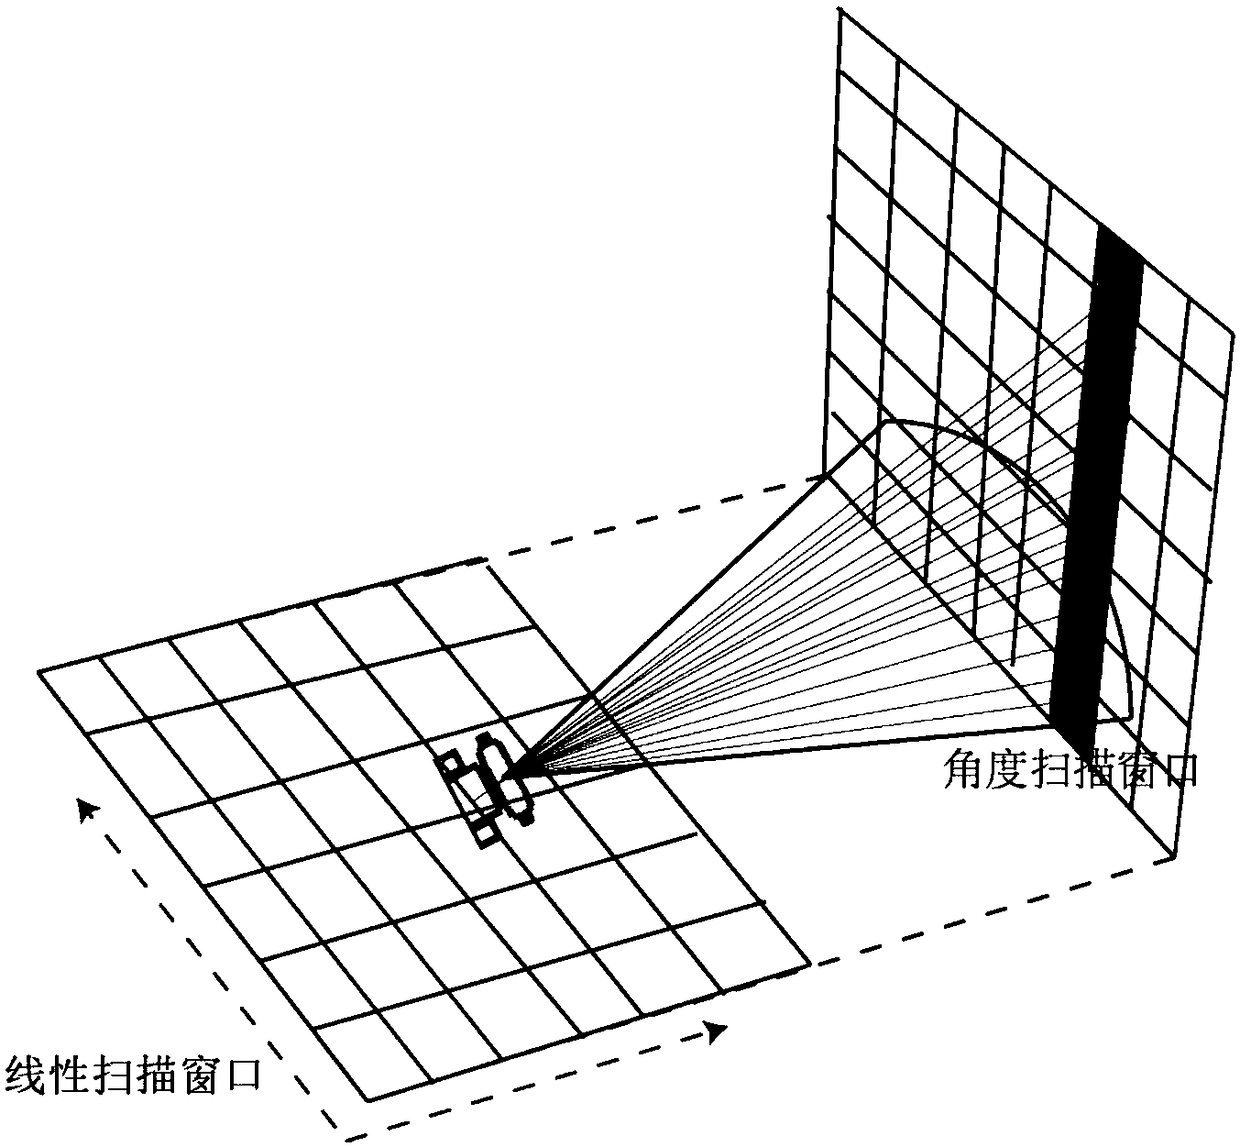 Robot three-dimensional laser location method under sparse environment